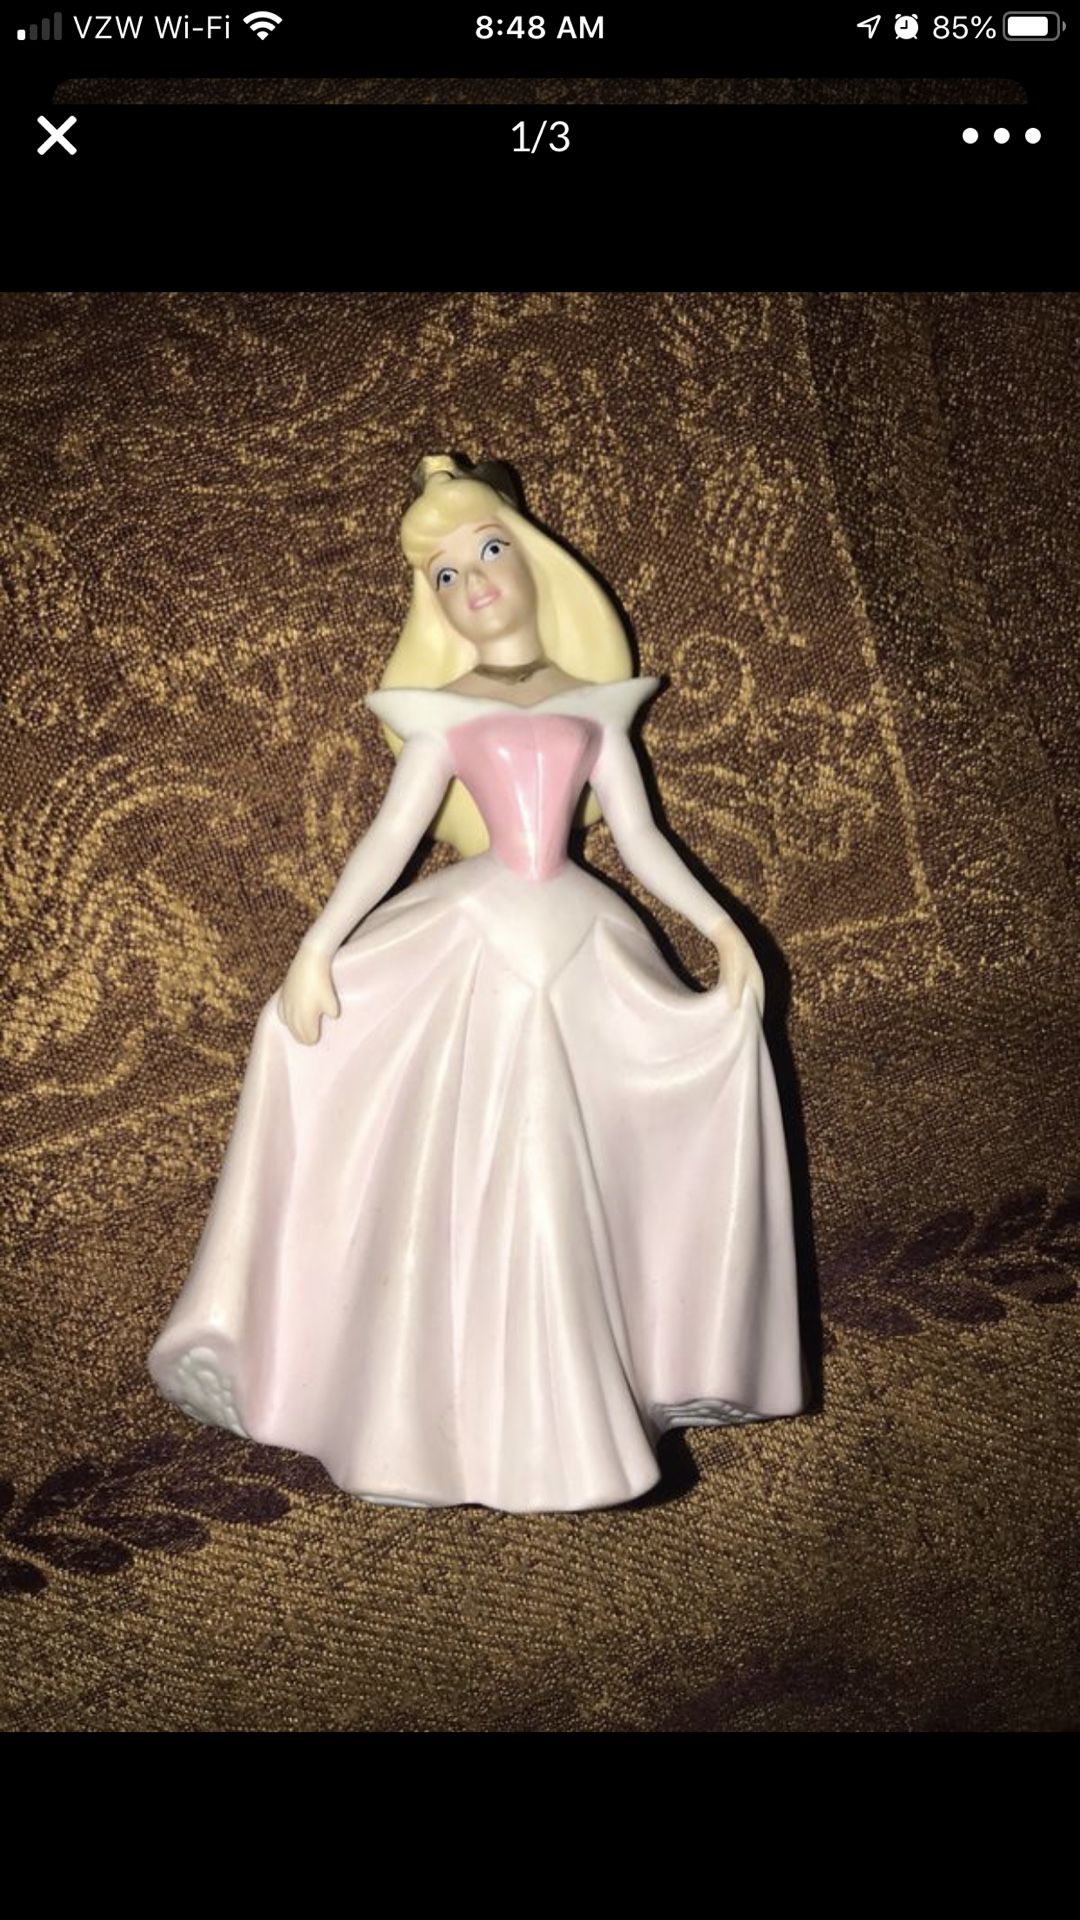 Disney’s sleeping Beauty ceramic statue collectible figurine